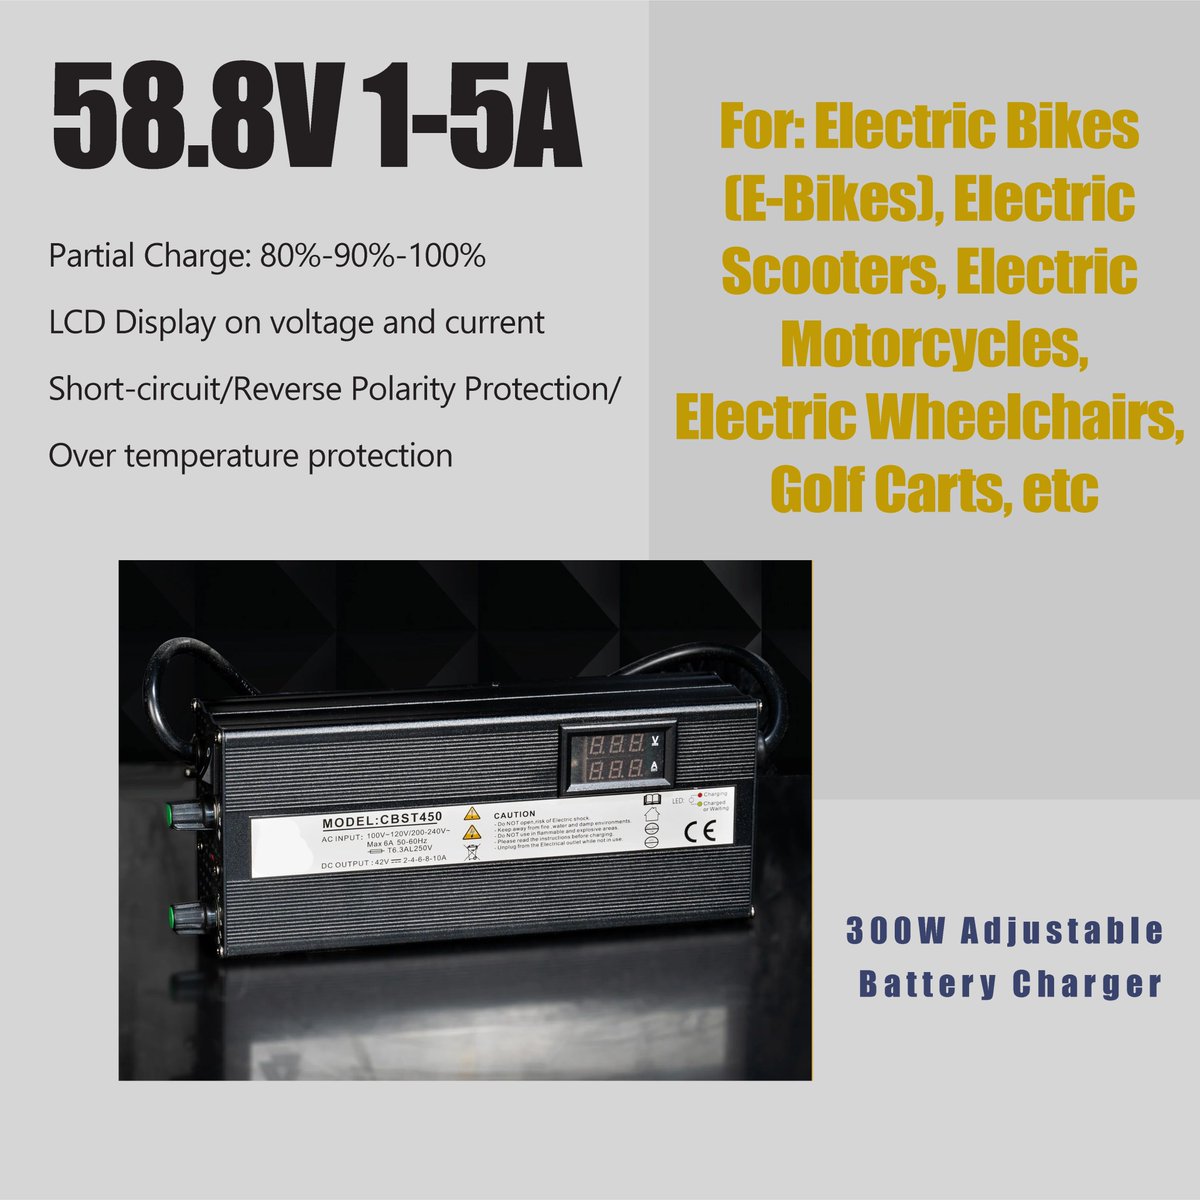 58.8V 1-5A adjustable battery charger!#BatteryCharger #CustomCharging #Innovation